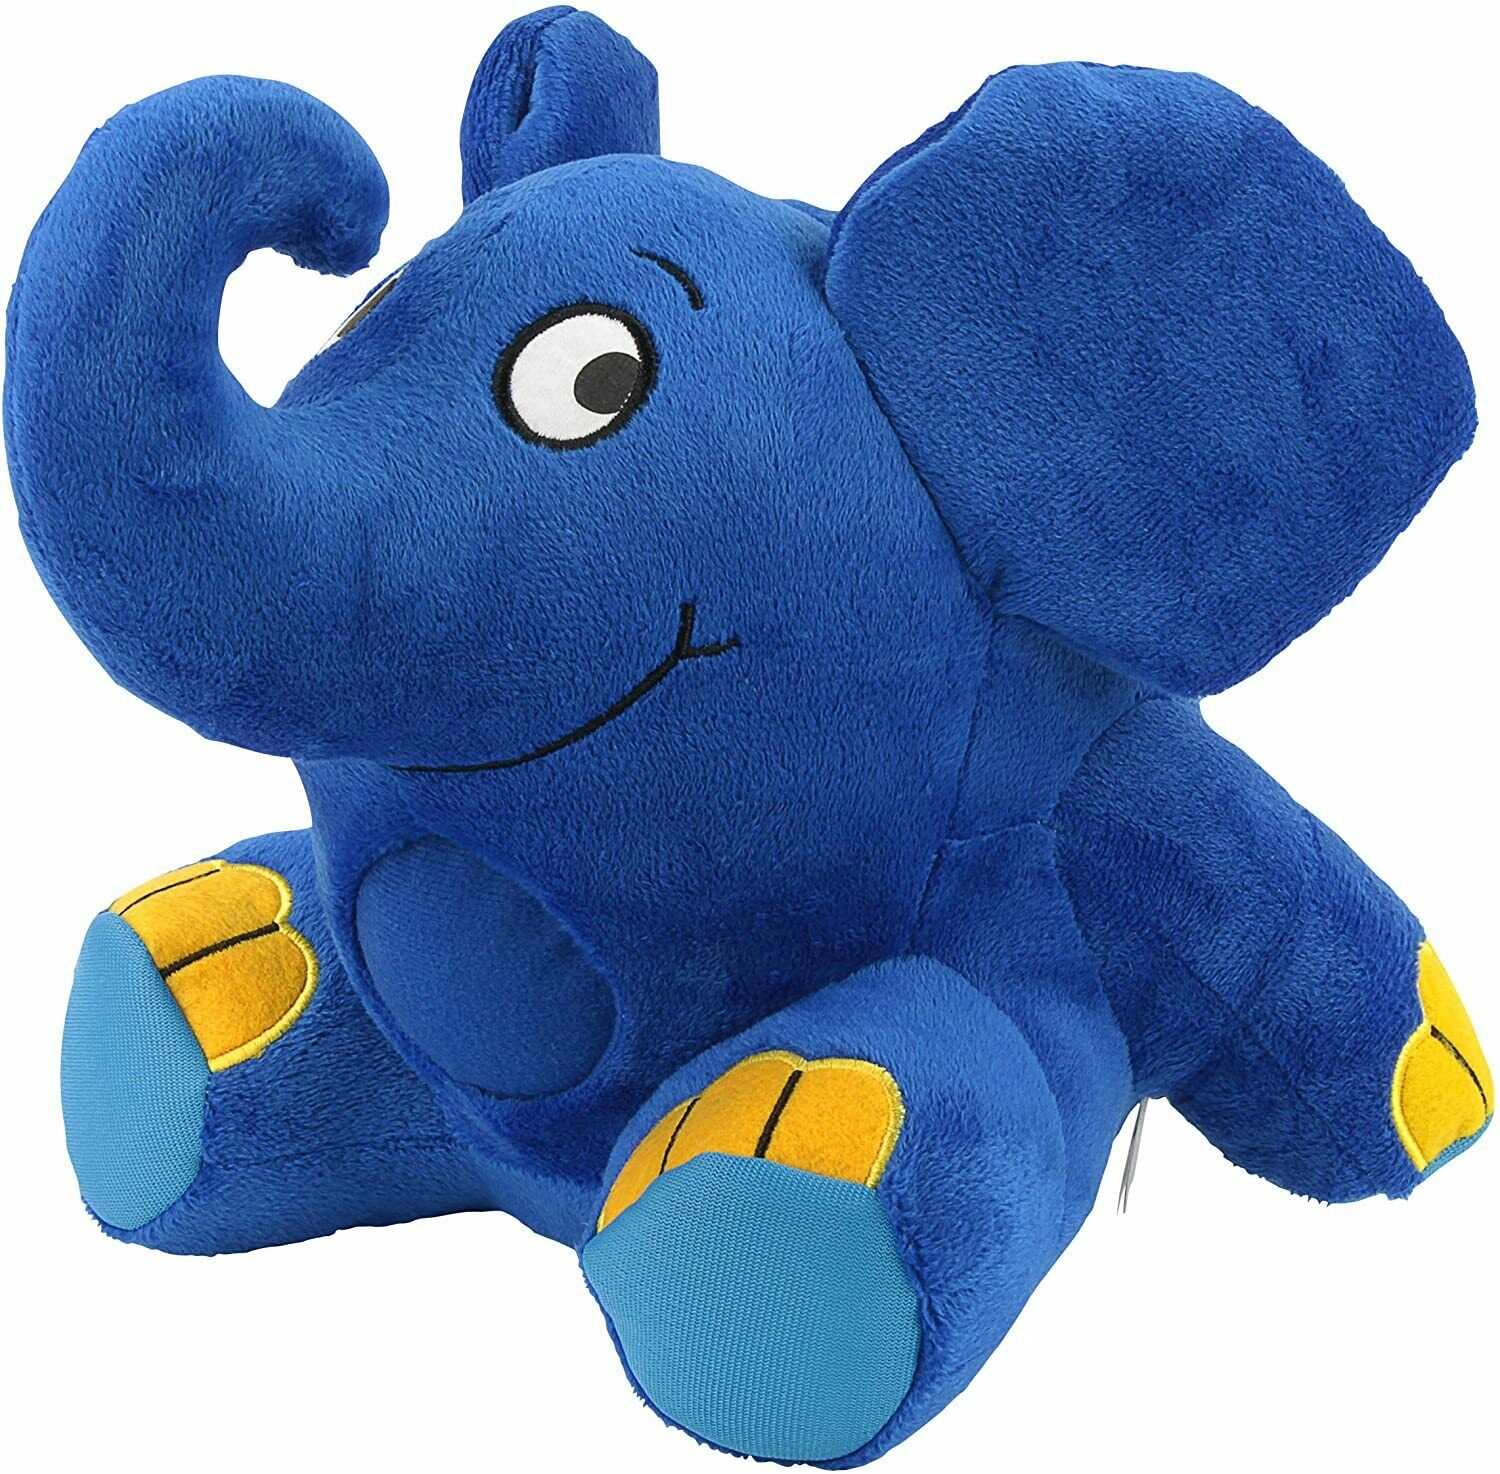 ANSMANN LED night light elephant sleep aid washable cuddly toy children 8770